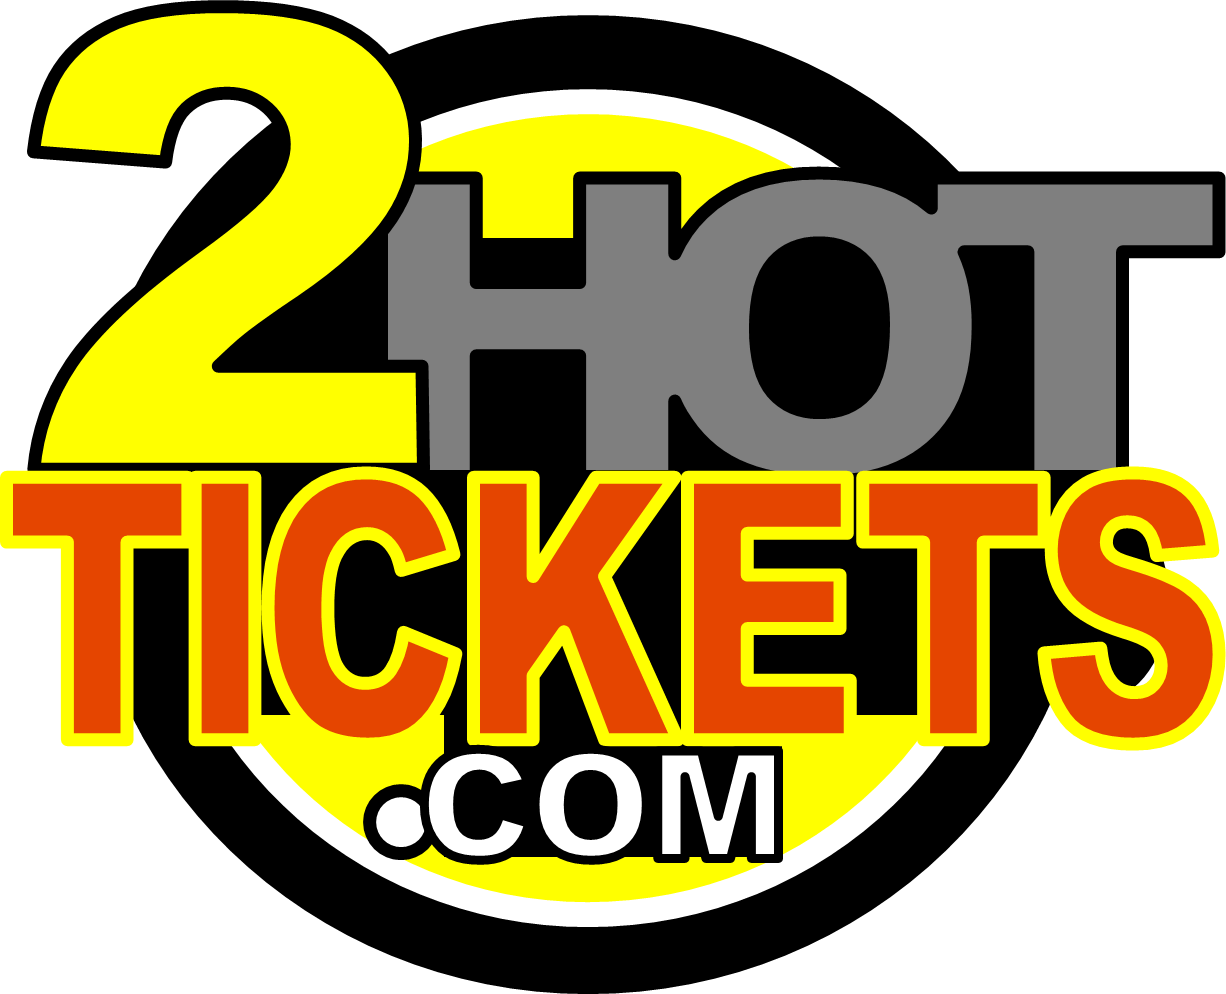 2 Hot Tickets Logo yellow.png__PID:b6237c6d-a27b-4399-9e34-3eb08ccf3dfd